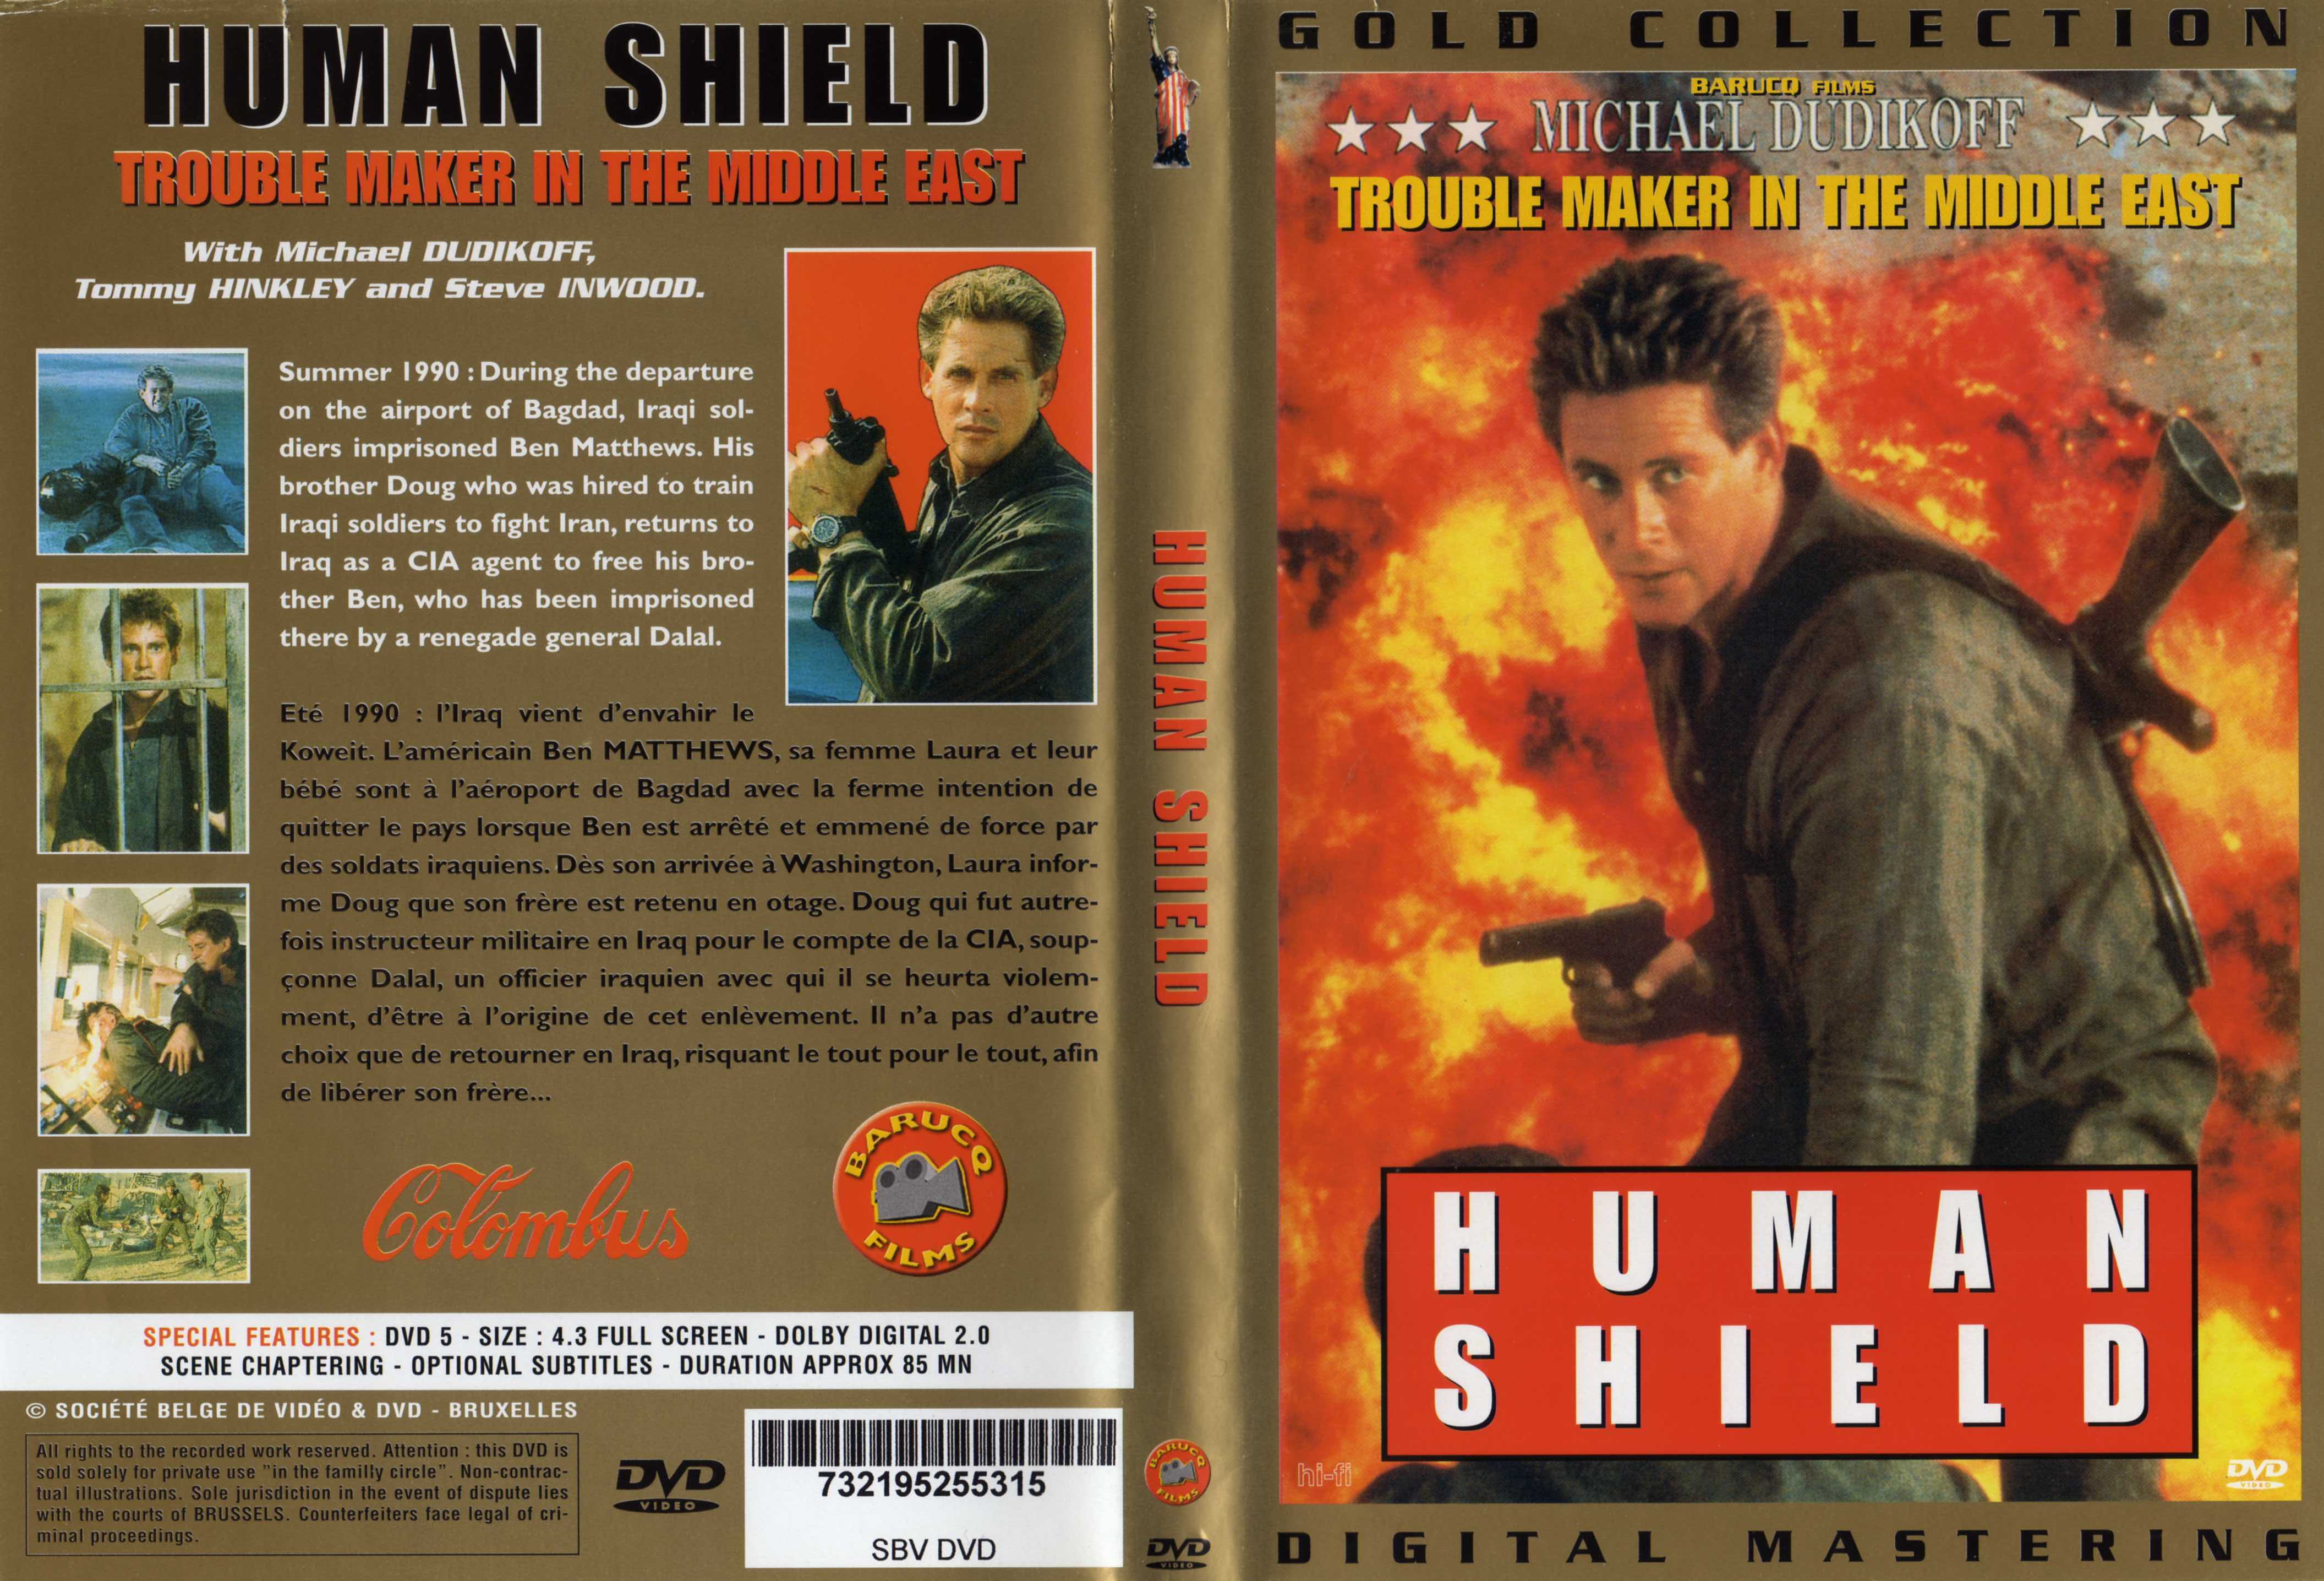 Jaquette DVD Human shield